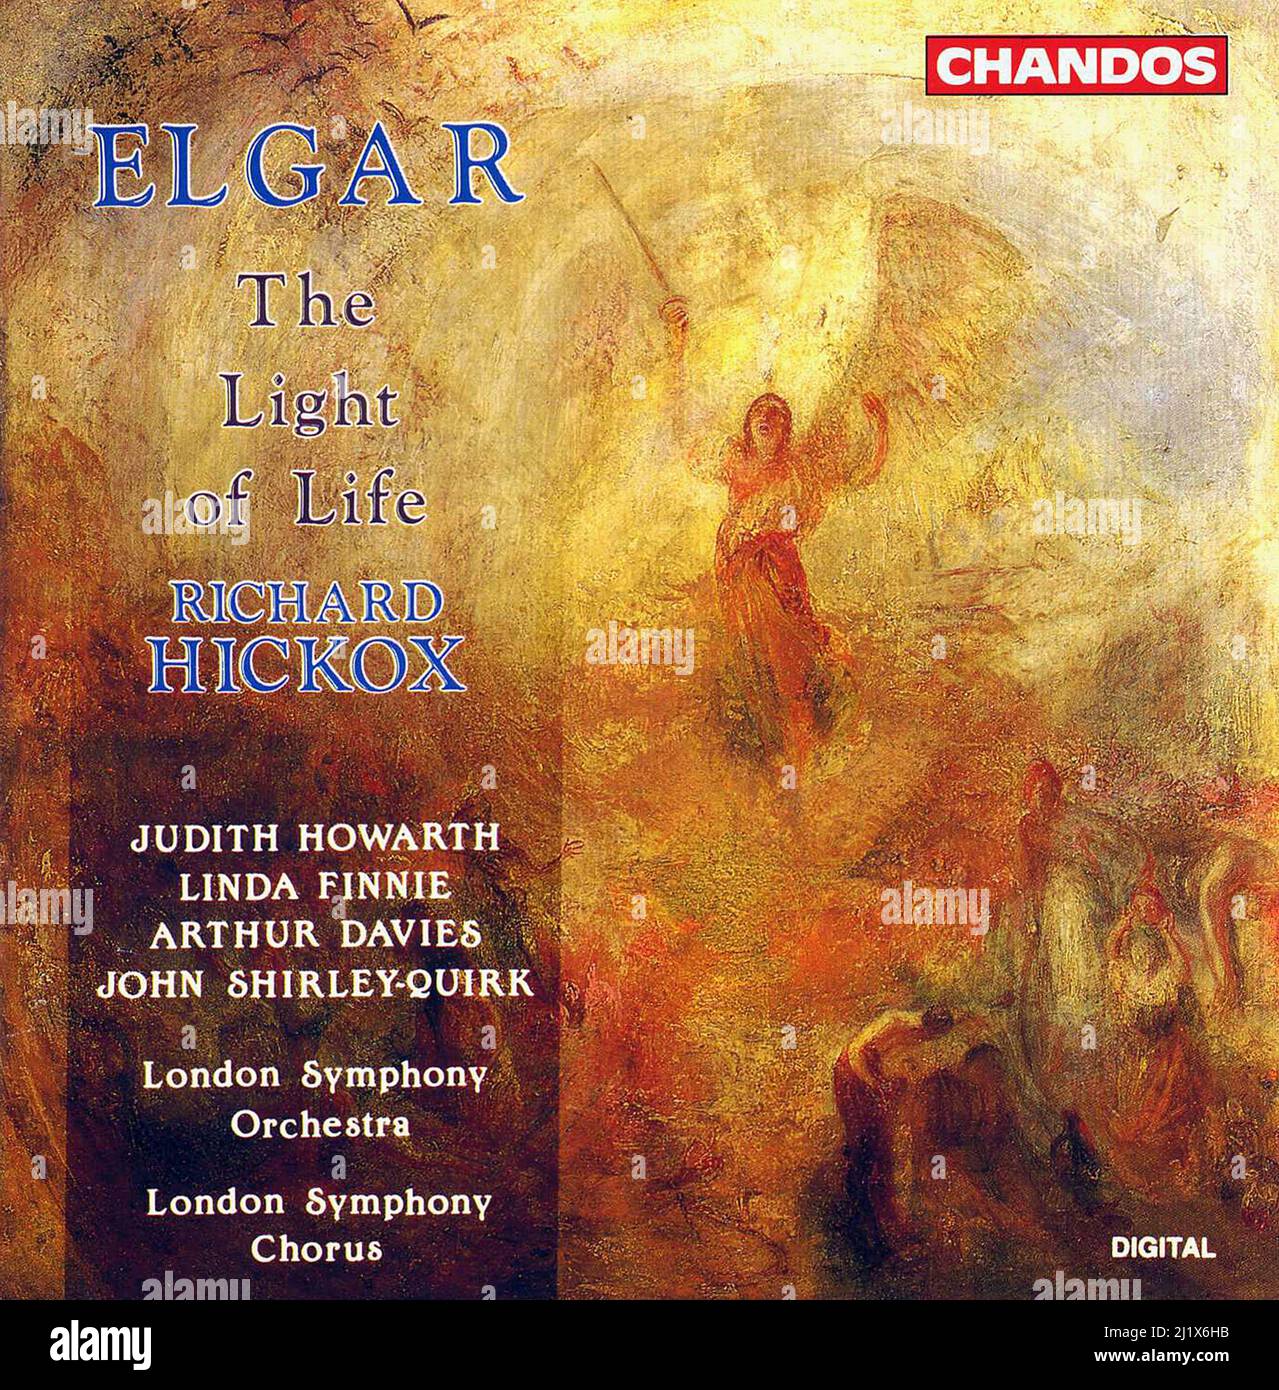 CD album cover. 'The Light of Life'. Edward Elgar. Richard Hickox. London Symphony Orchestra. Stock Photo